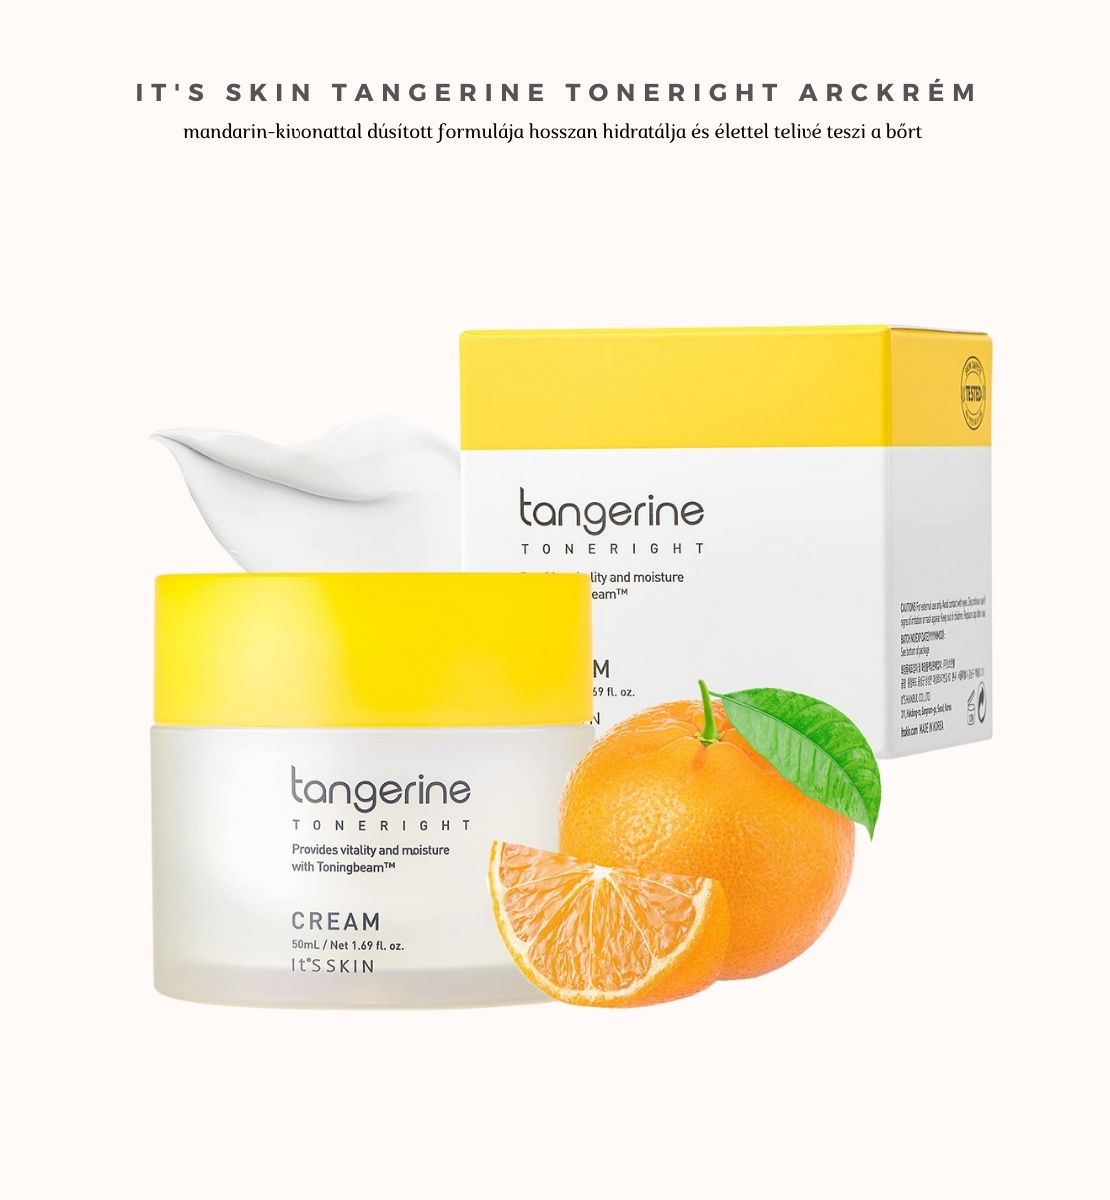 Its-skin-tangerine-toneright-arckrem-leiras